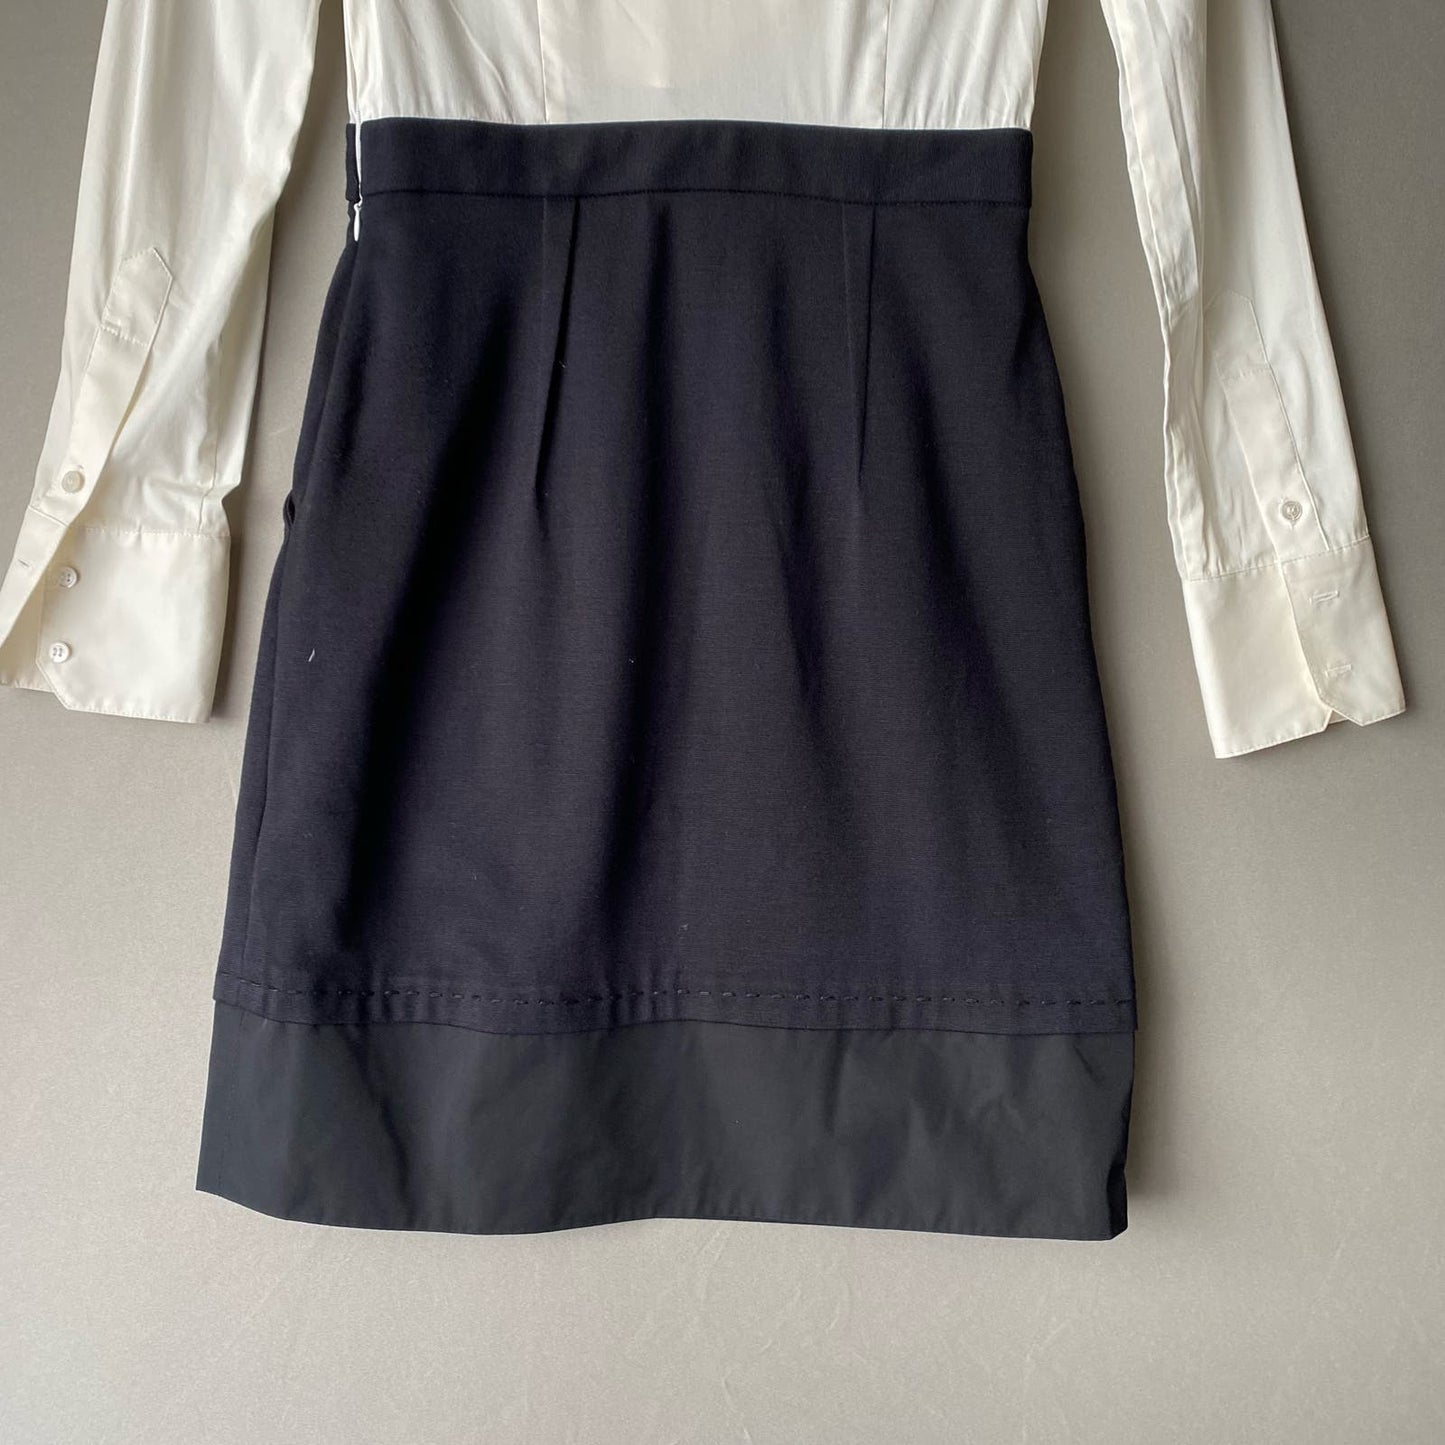 BCBG Maxazria sz 2 half button Victorian collar pocketed sheath dress